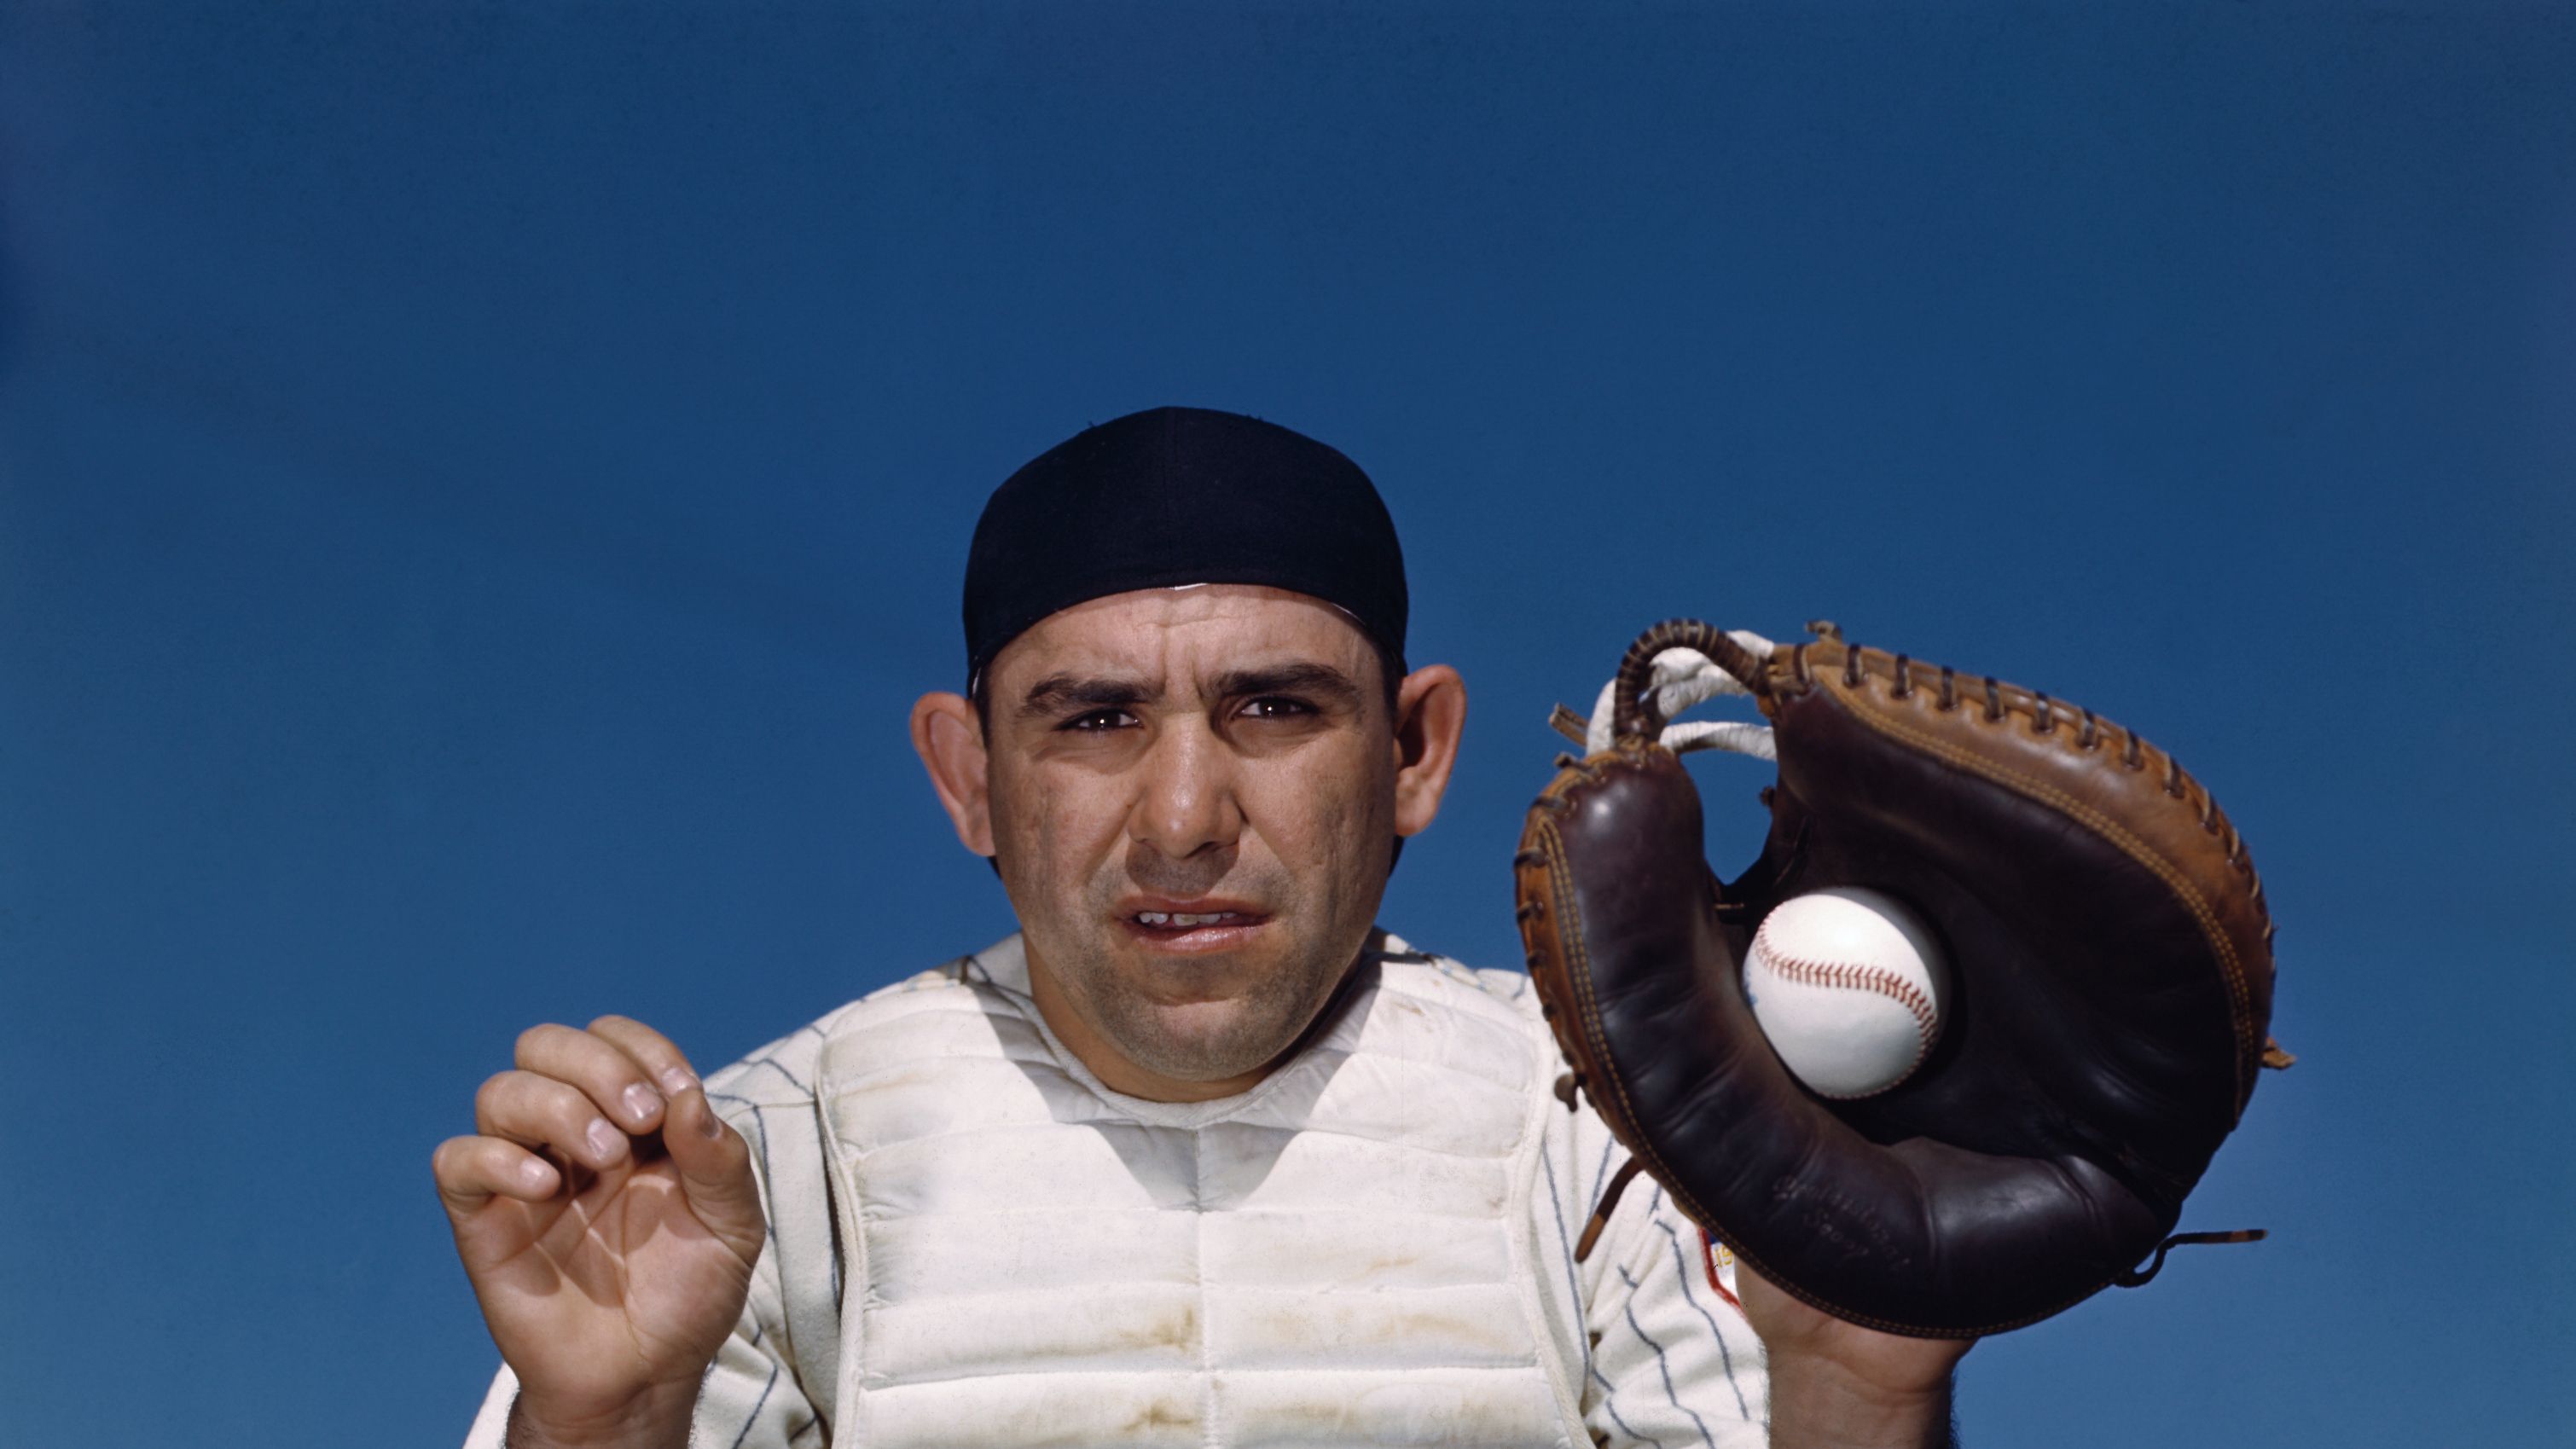 New York Mets manager Yogi Berra stands in between third baseman Joe  News Photo - Getty Images